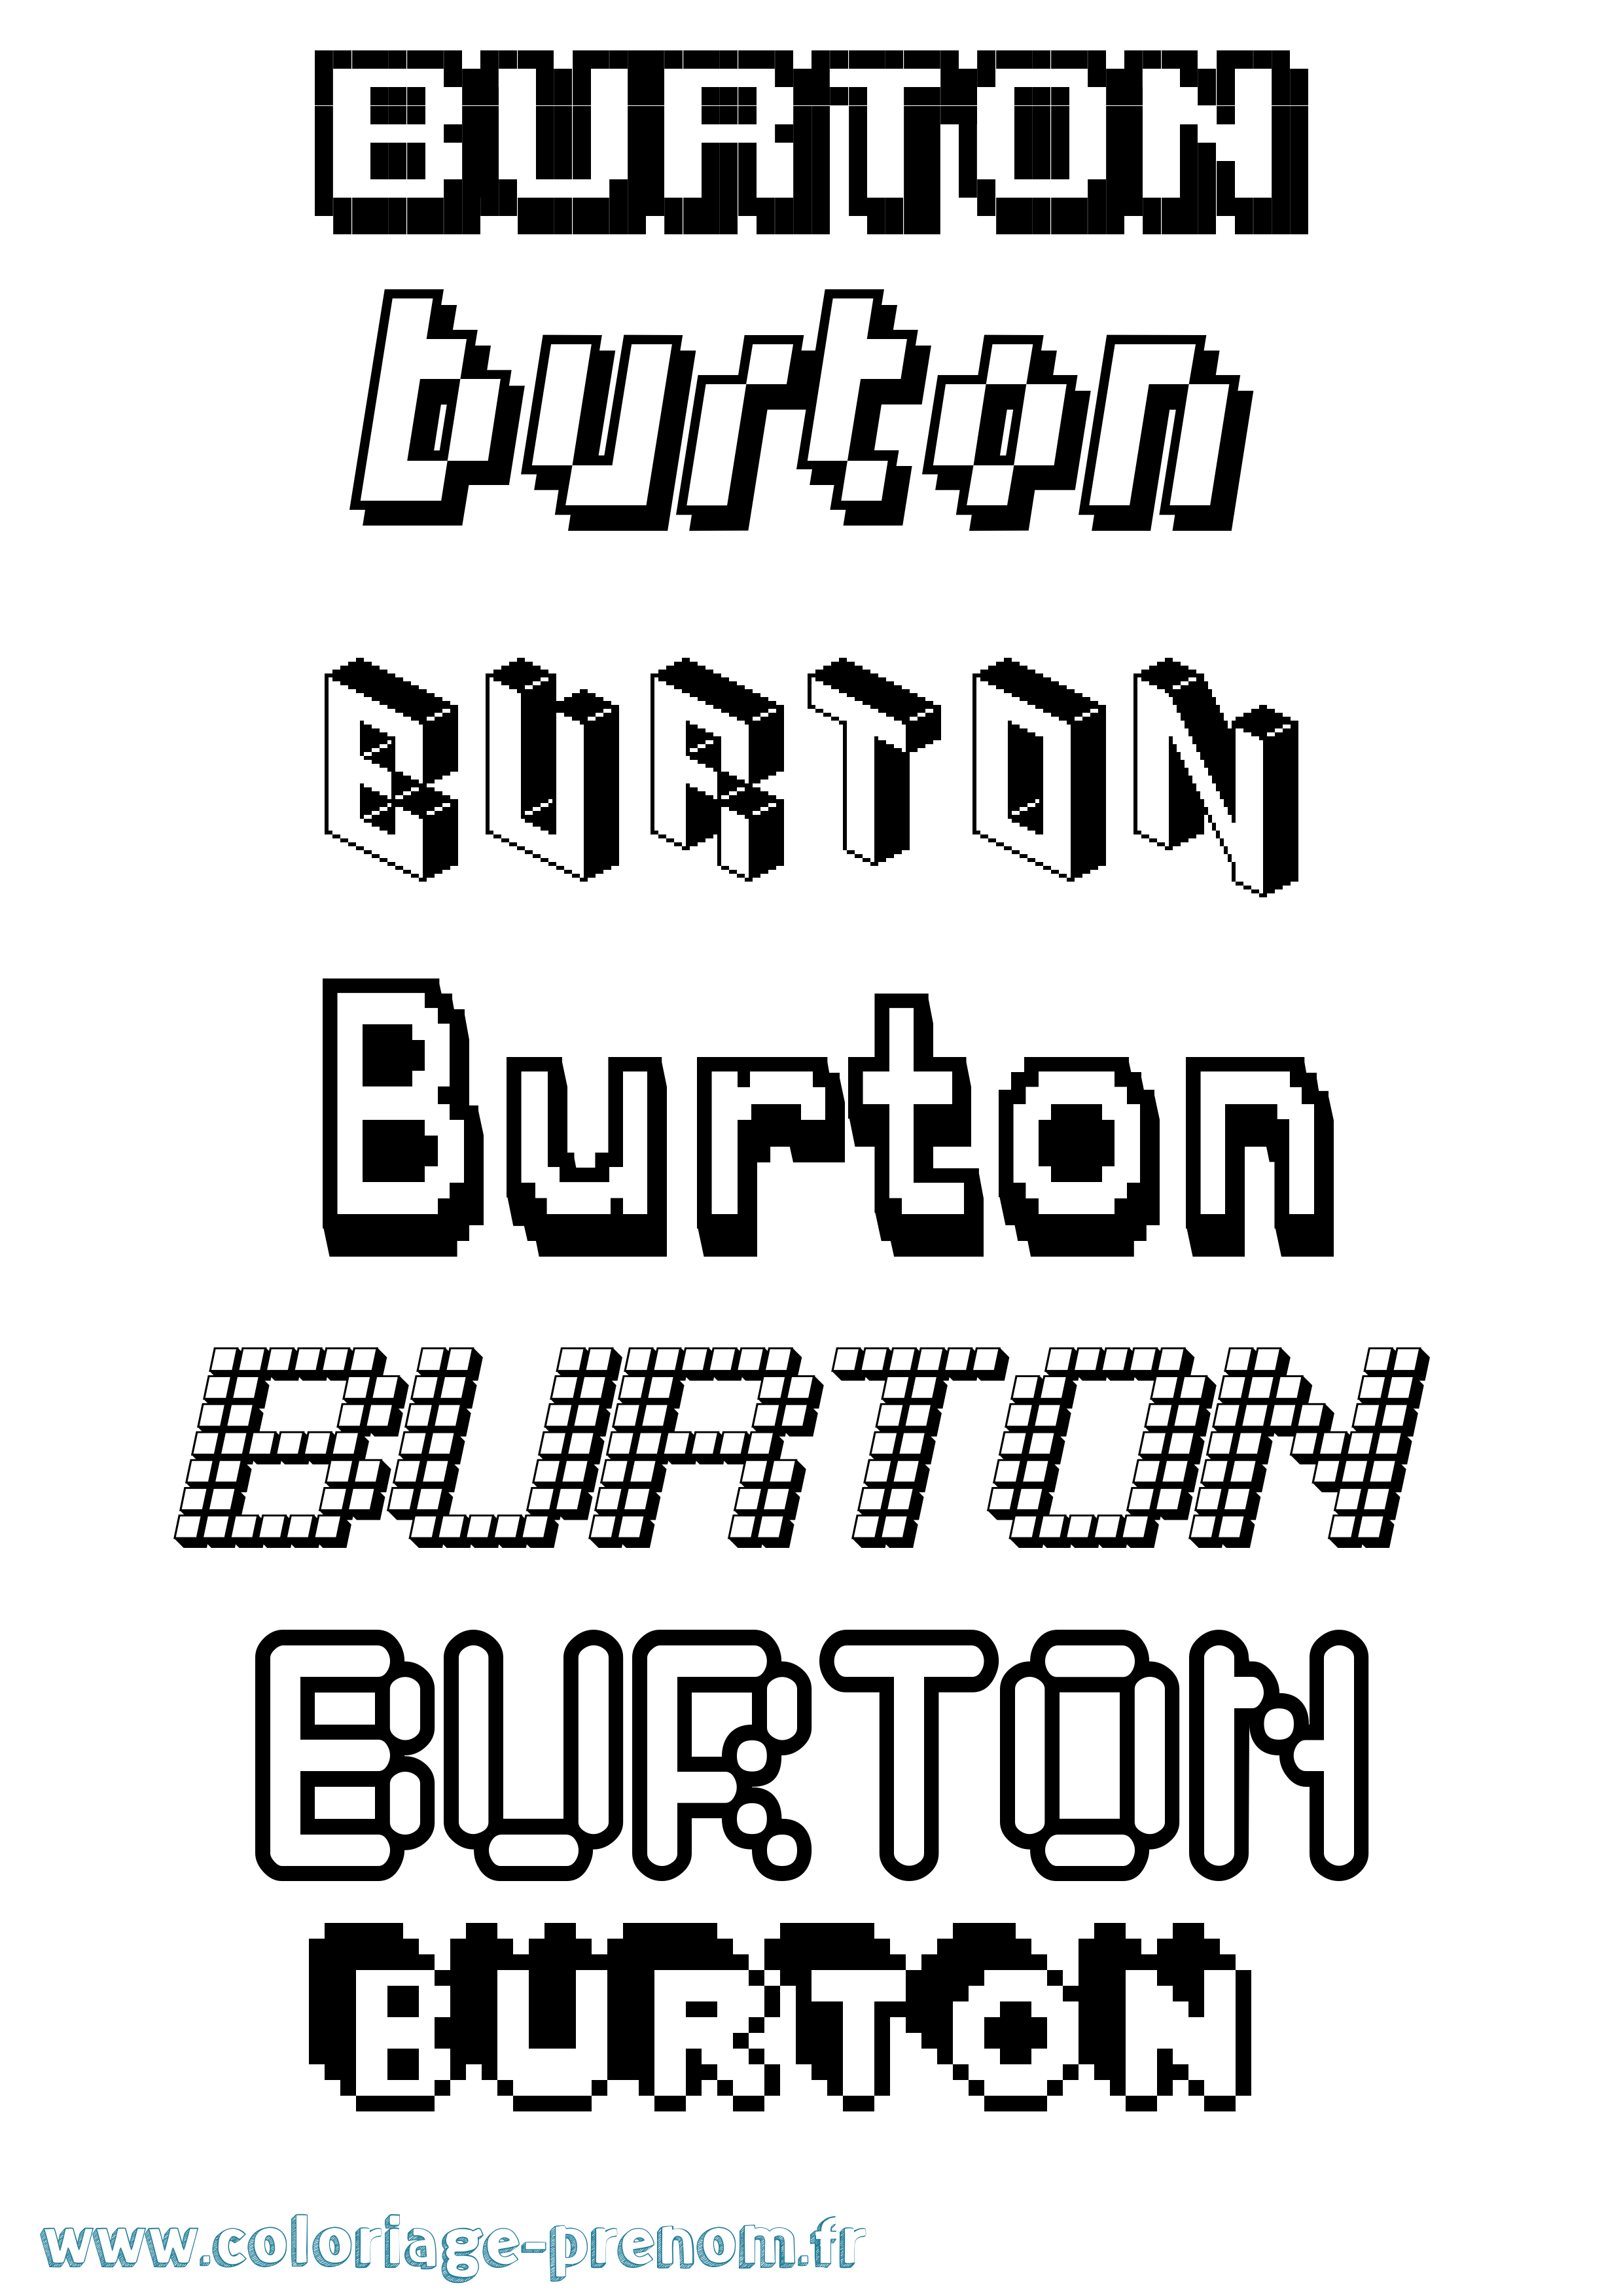 Coloriage prénom Burton Pixel